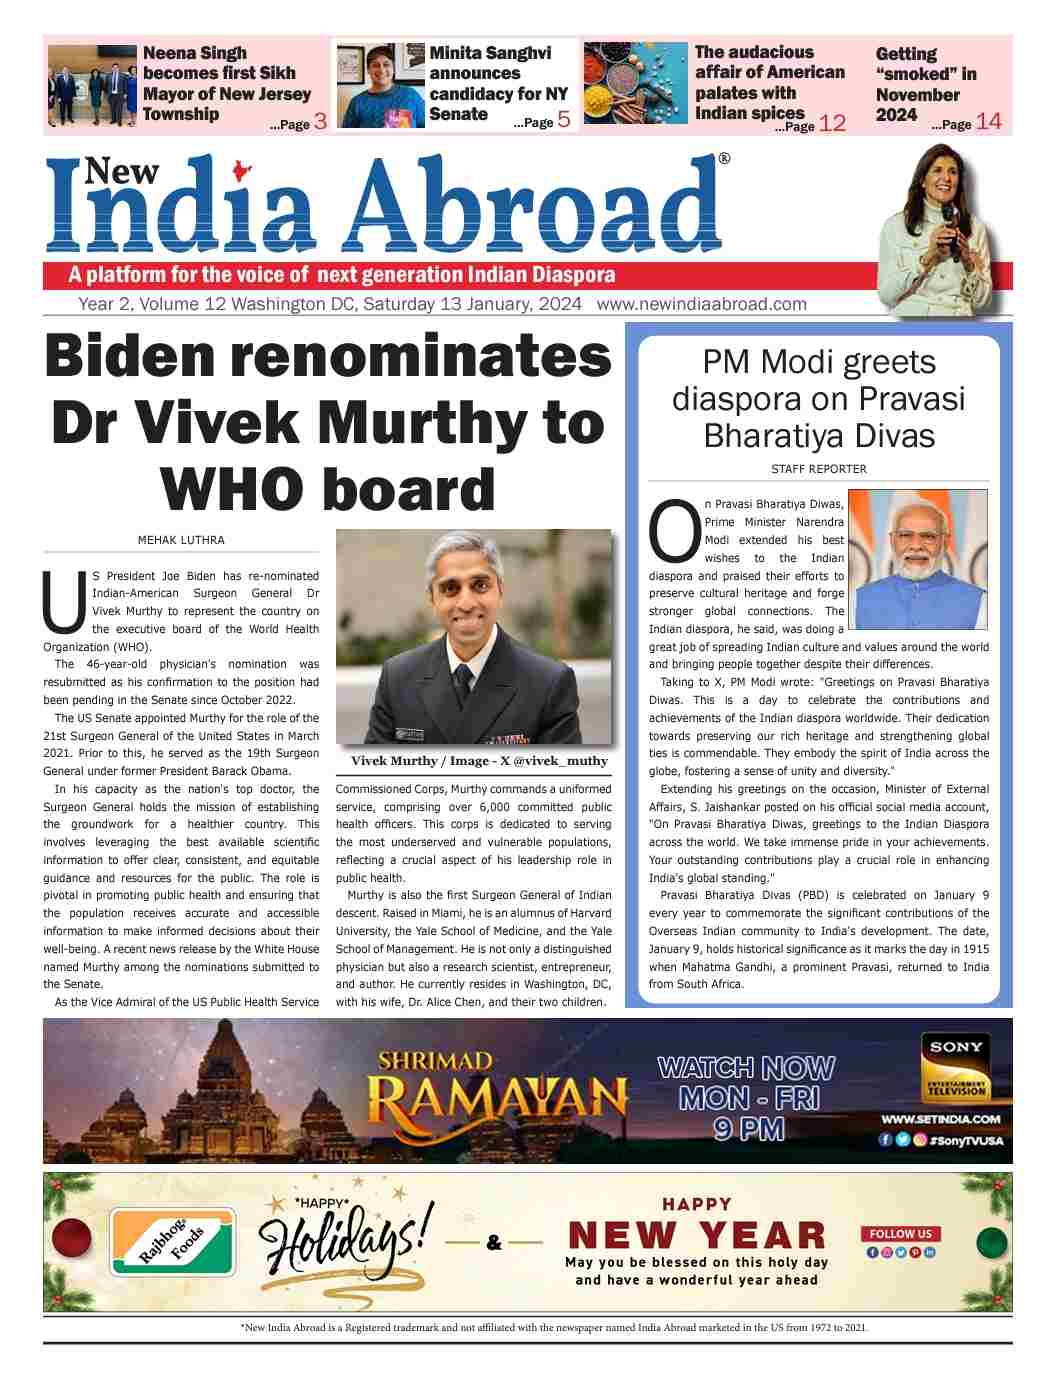 Biden Renominates Vivek Murthy To WHO Board